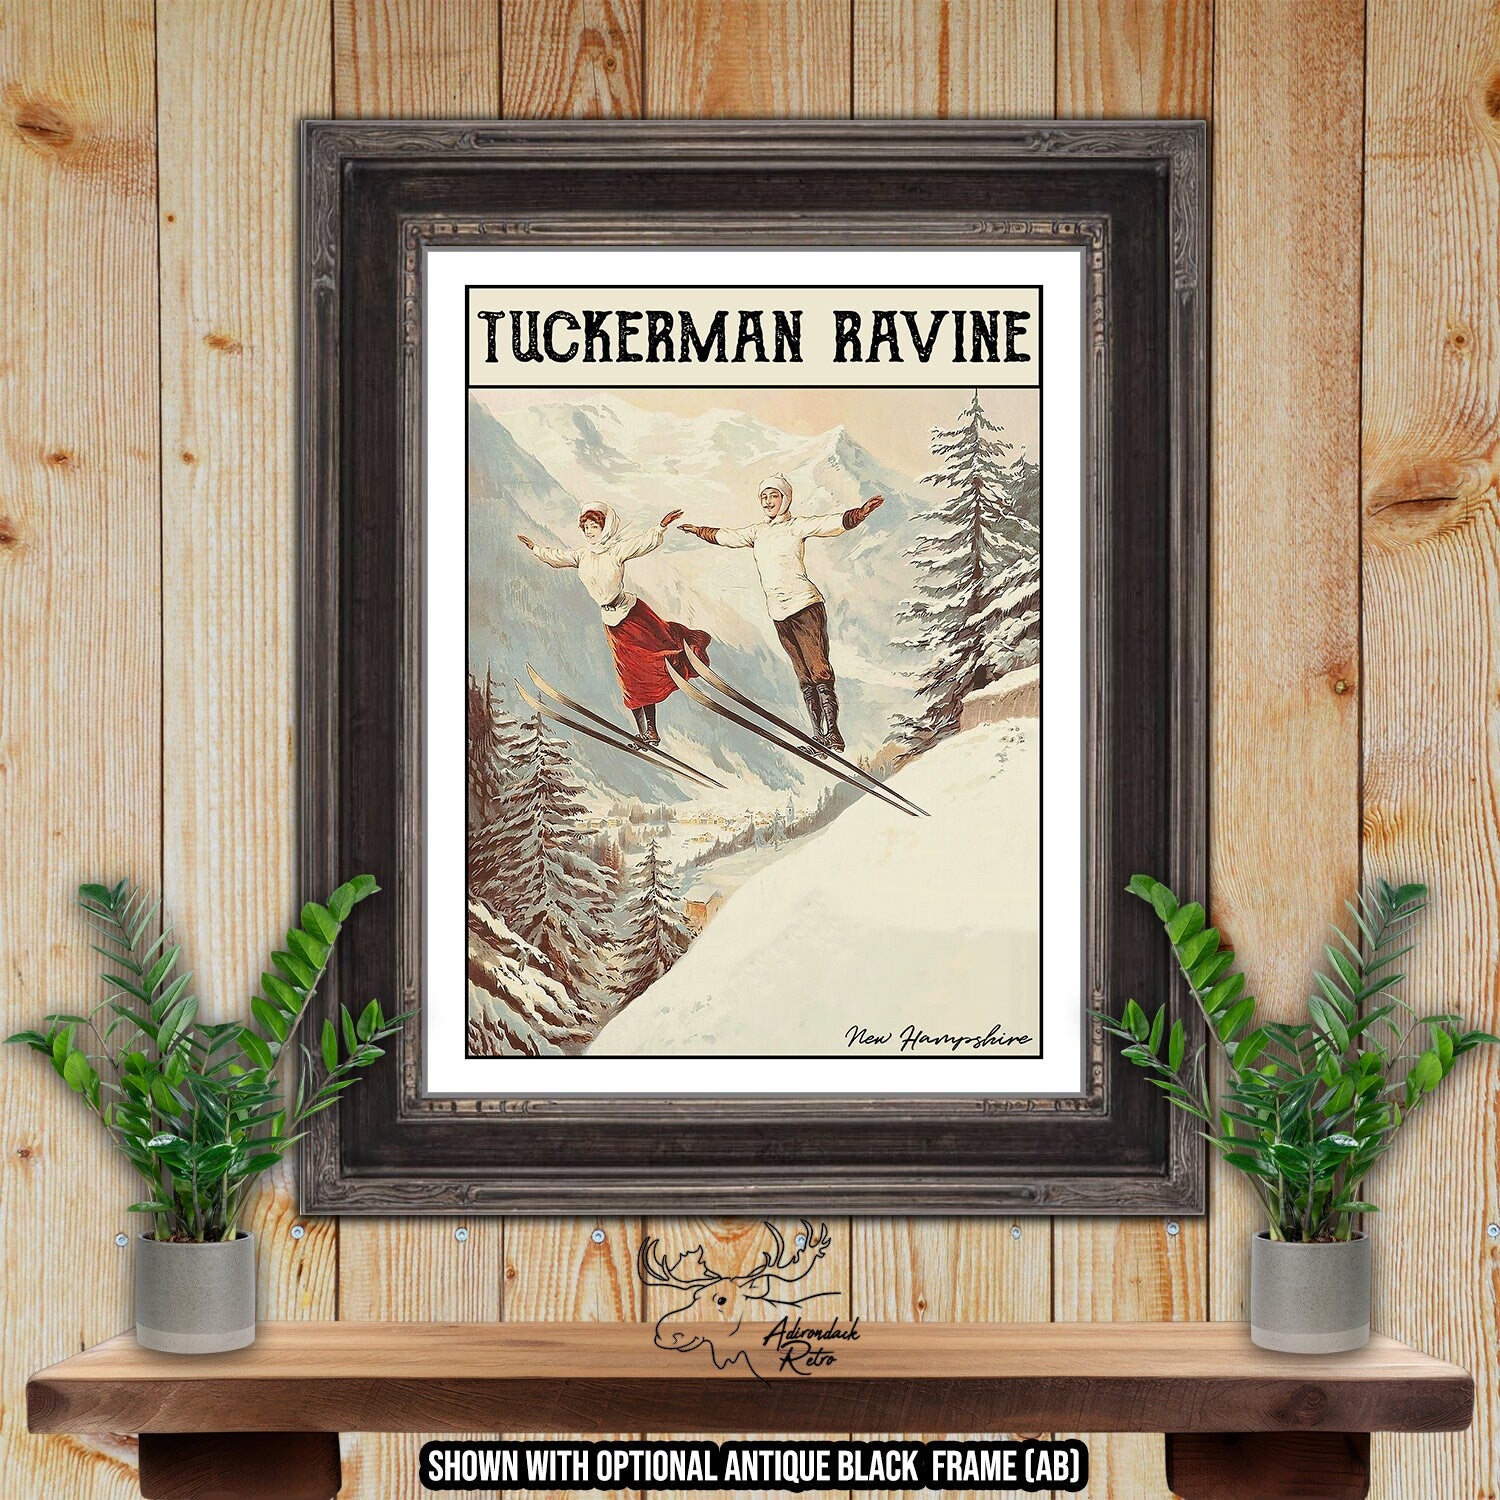 Tuckerman Ravine New Hampshire Retro Ski Resort Print at Adirondack Retro